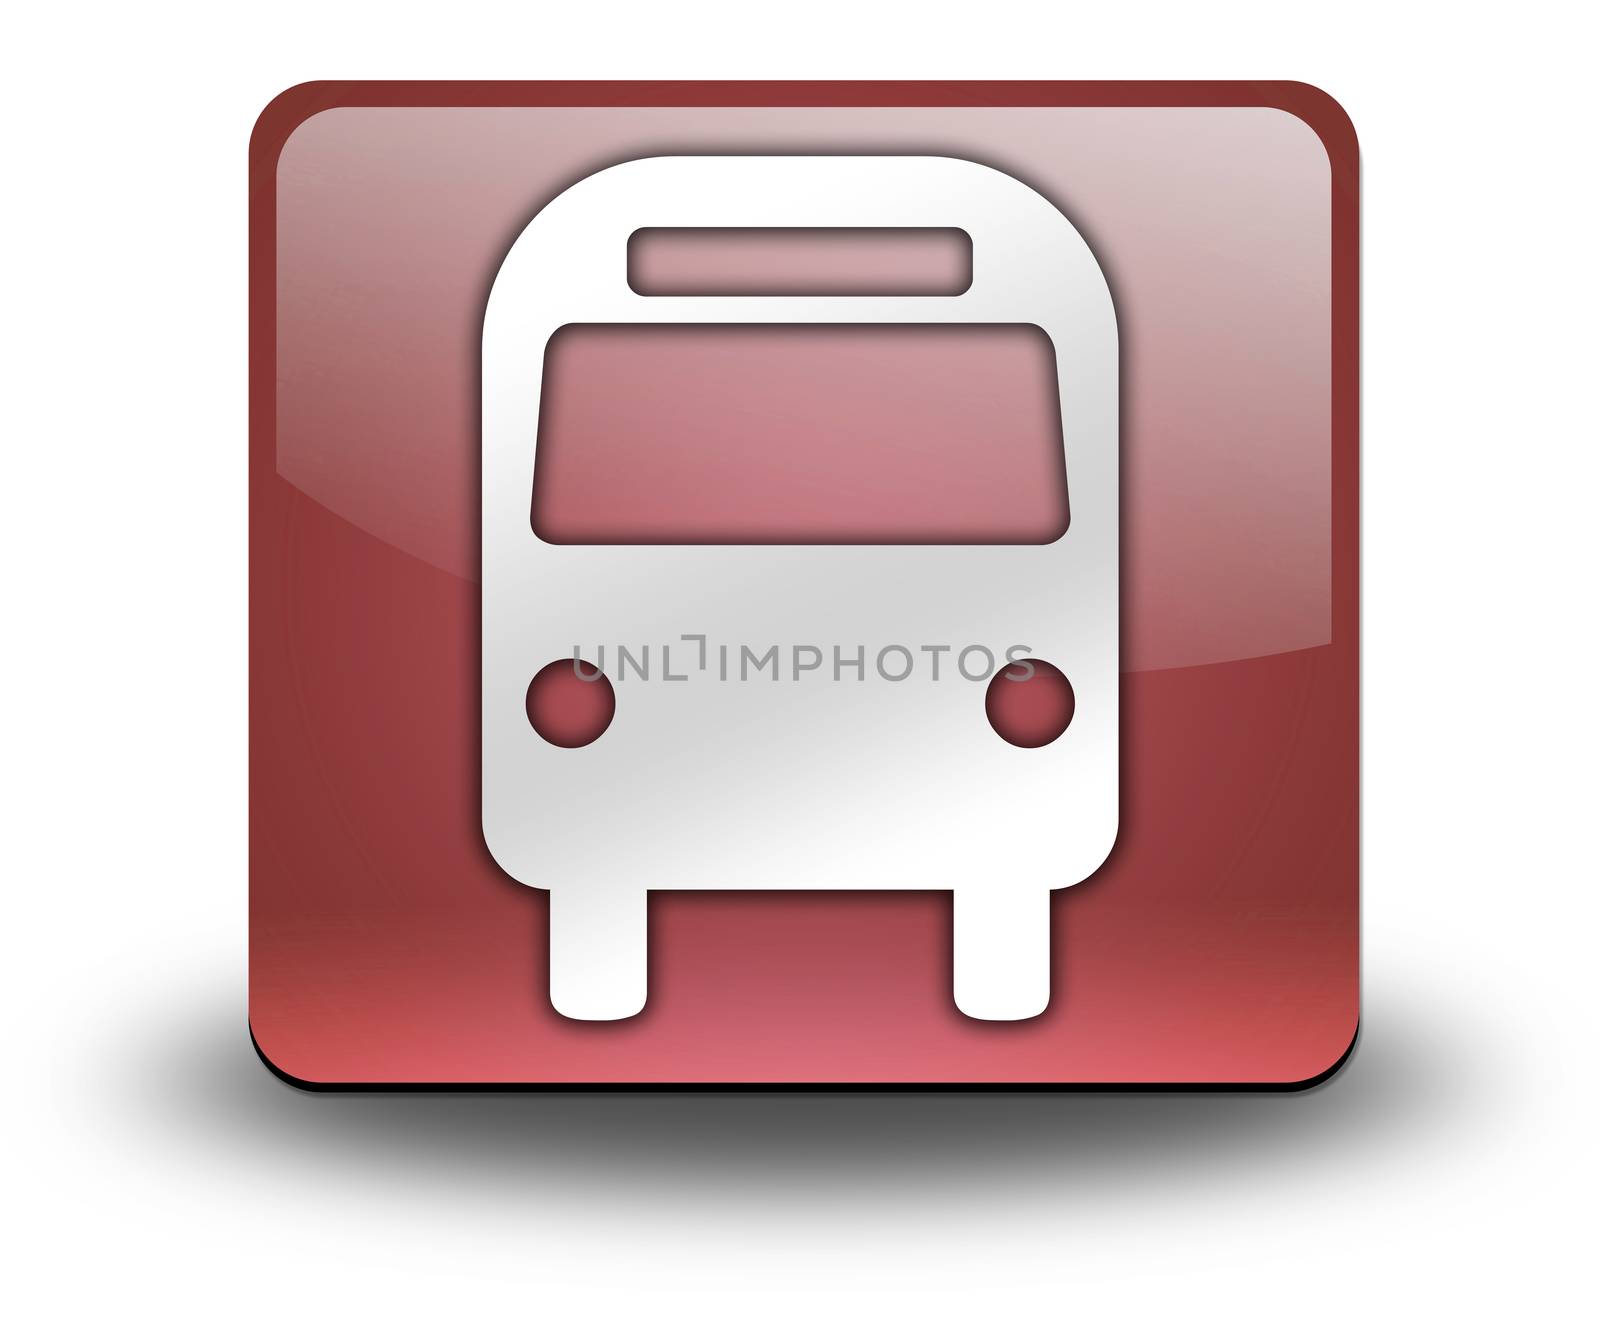 Icon/Button/Pictogram "Bus / Ground Transportation"